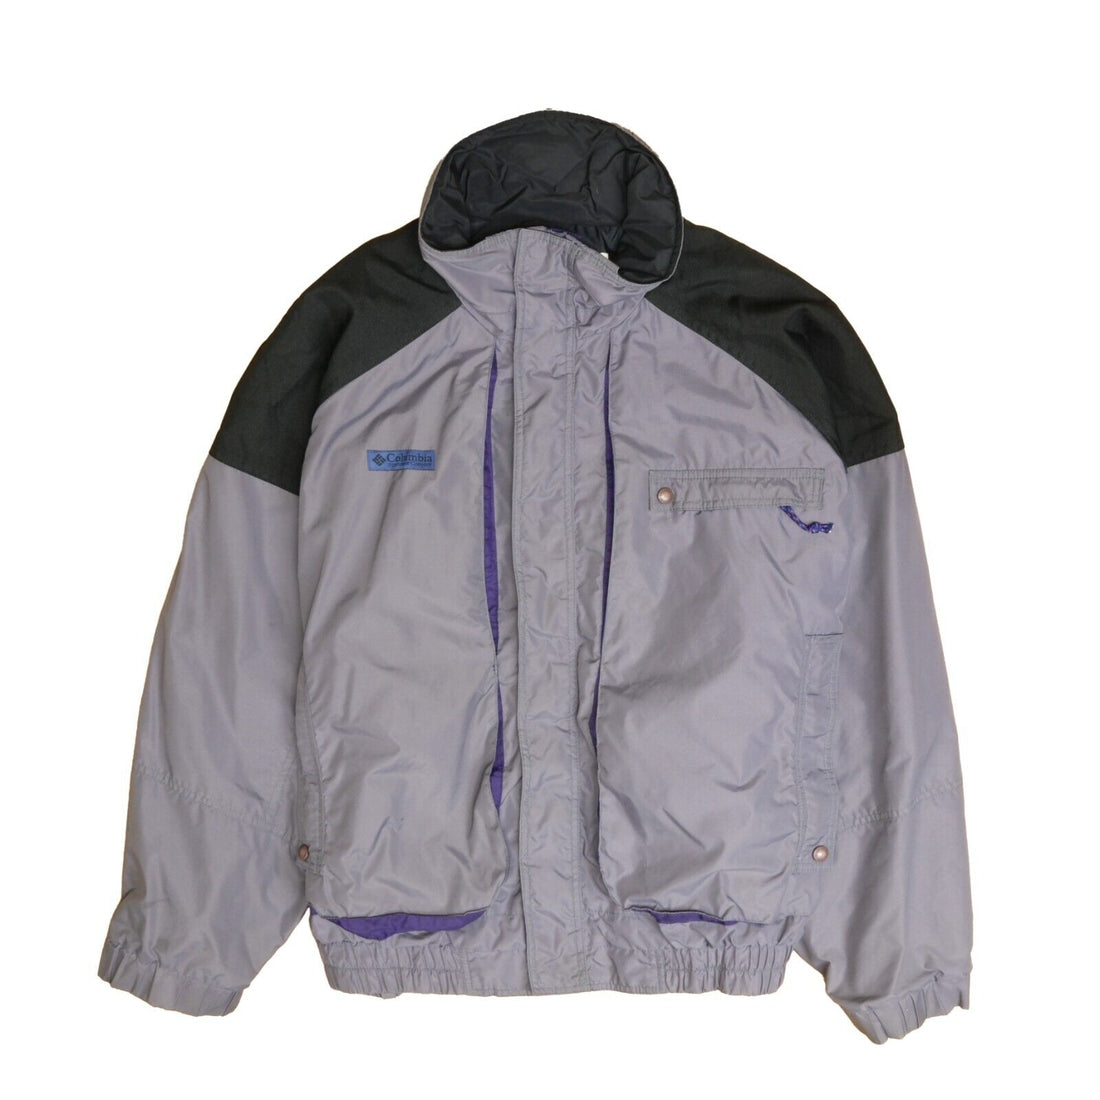 Vintage Columbia Sportswear Bomber Ski Jacket Size XL Gray 90s